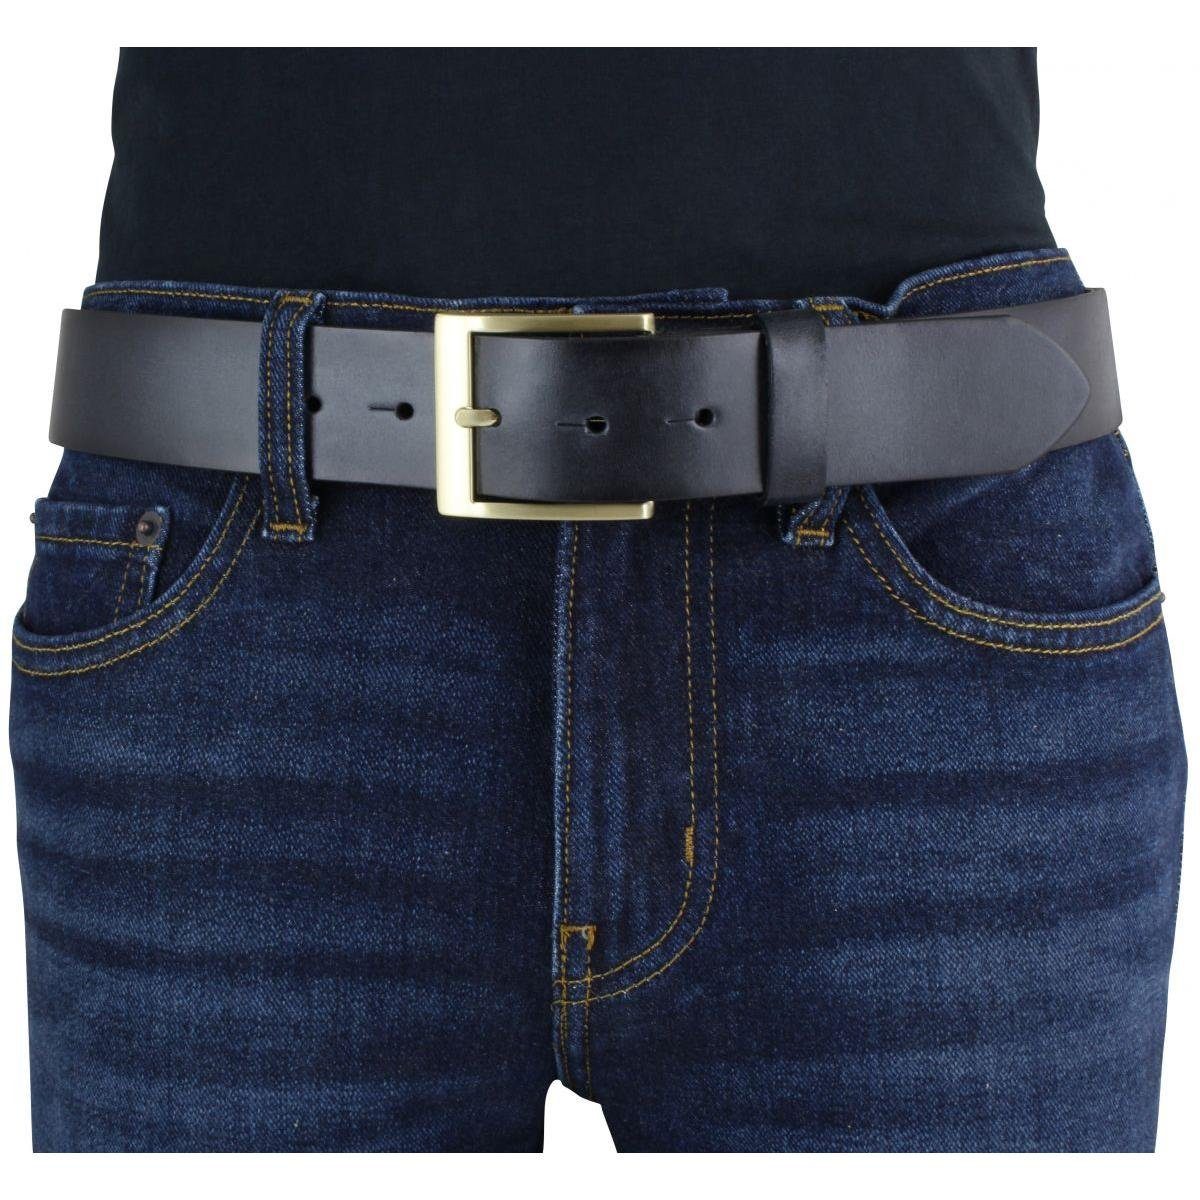 4 g Vollrindleder Jeans-Gürtel Schwarz, aus mit Herren-Gürtel BELTINGER cm Ledergürtel Vintage-Look Gold -